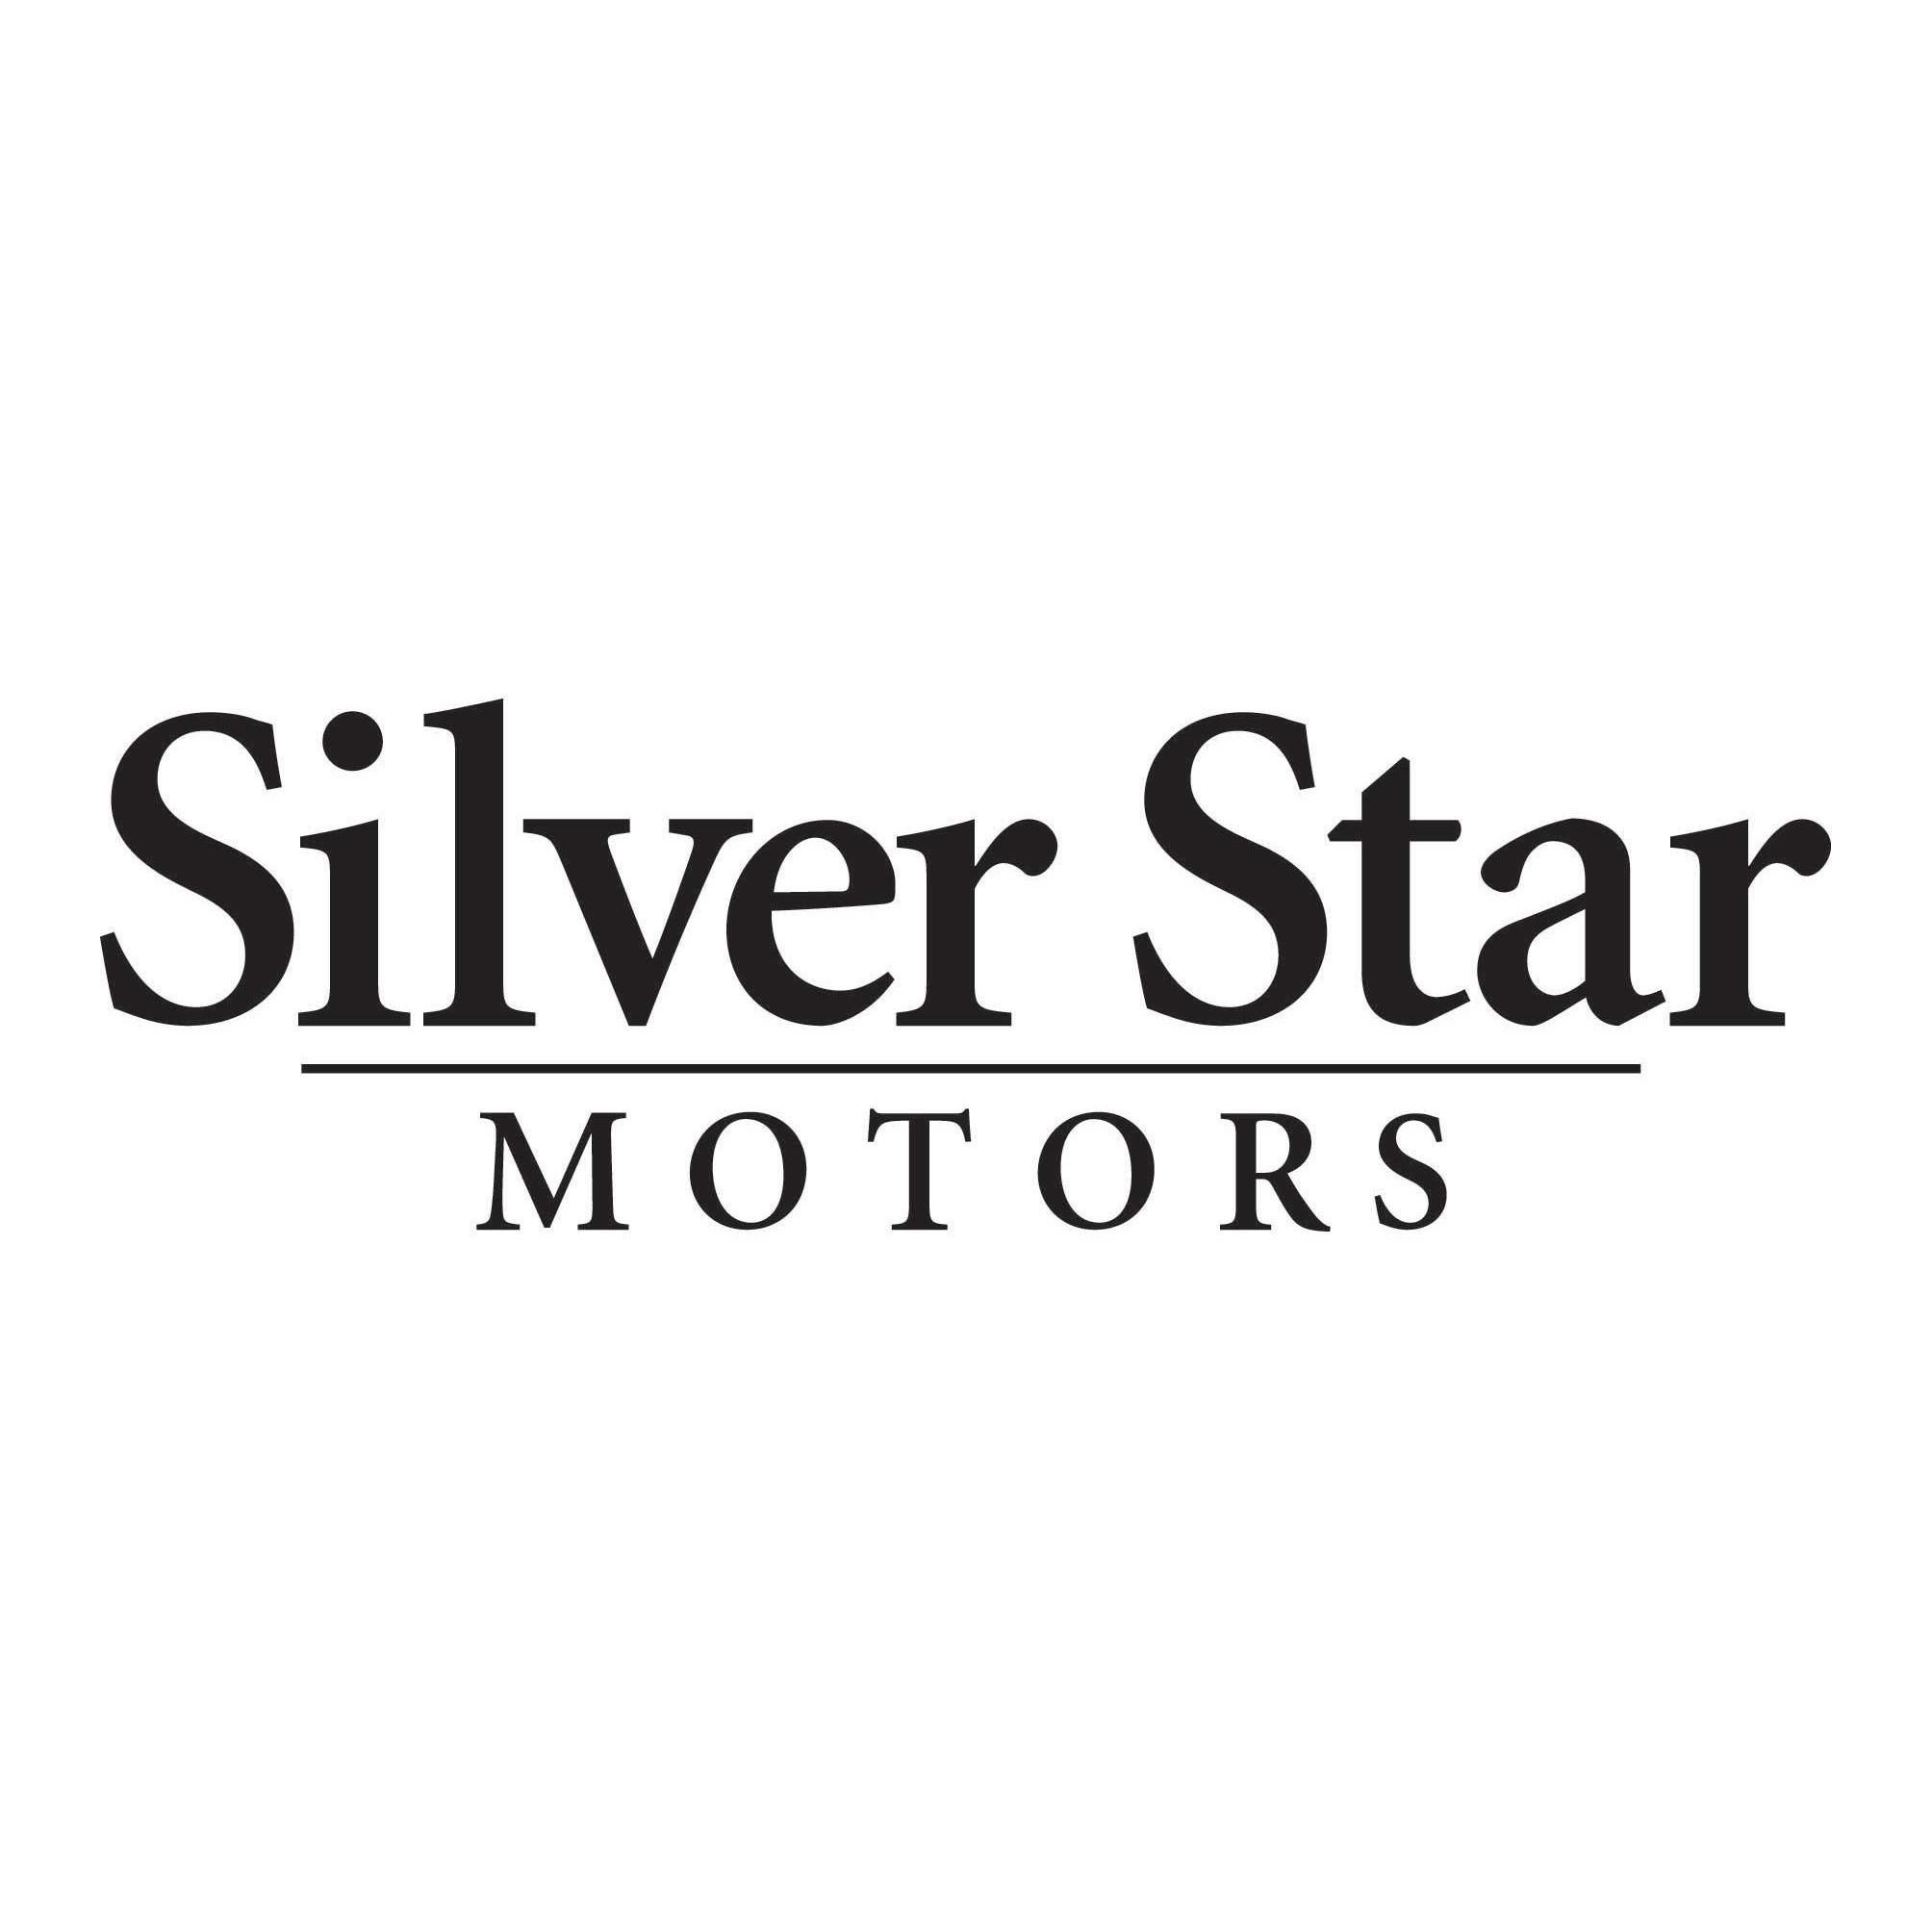 Silver Star Motors Logo